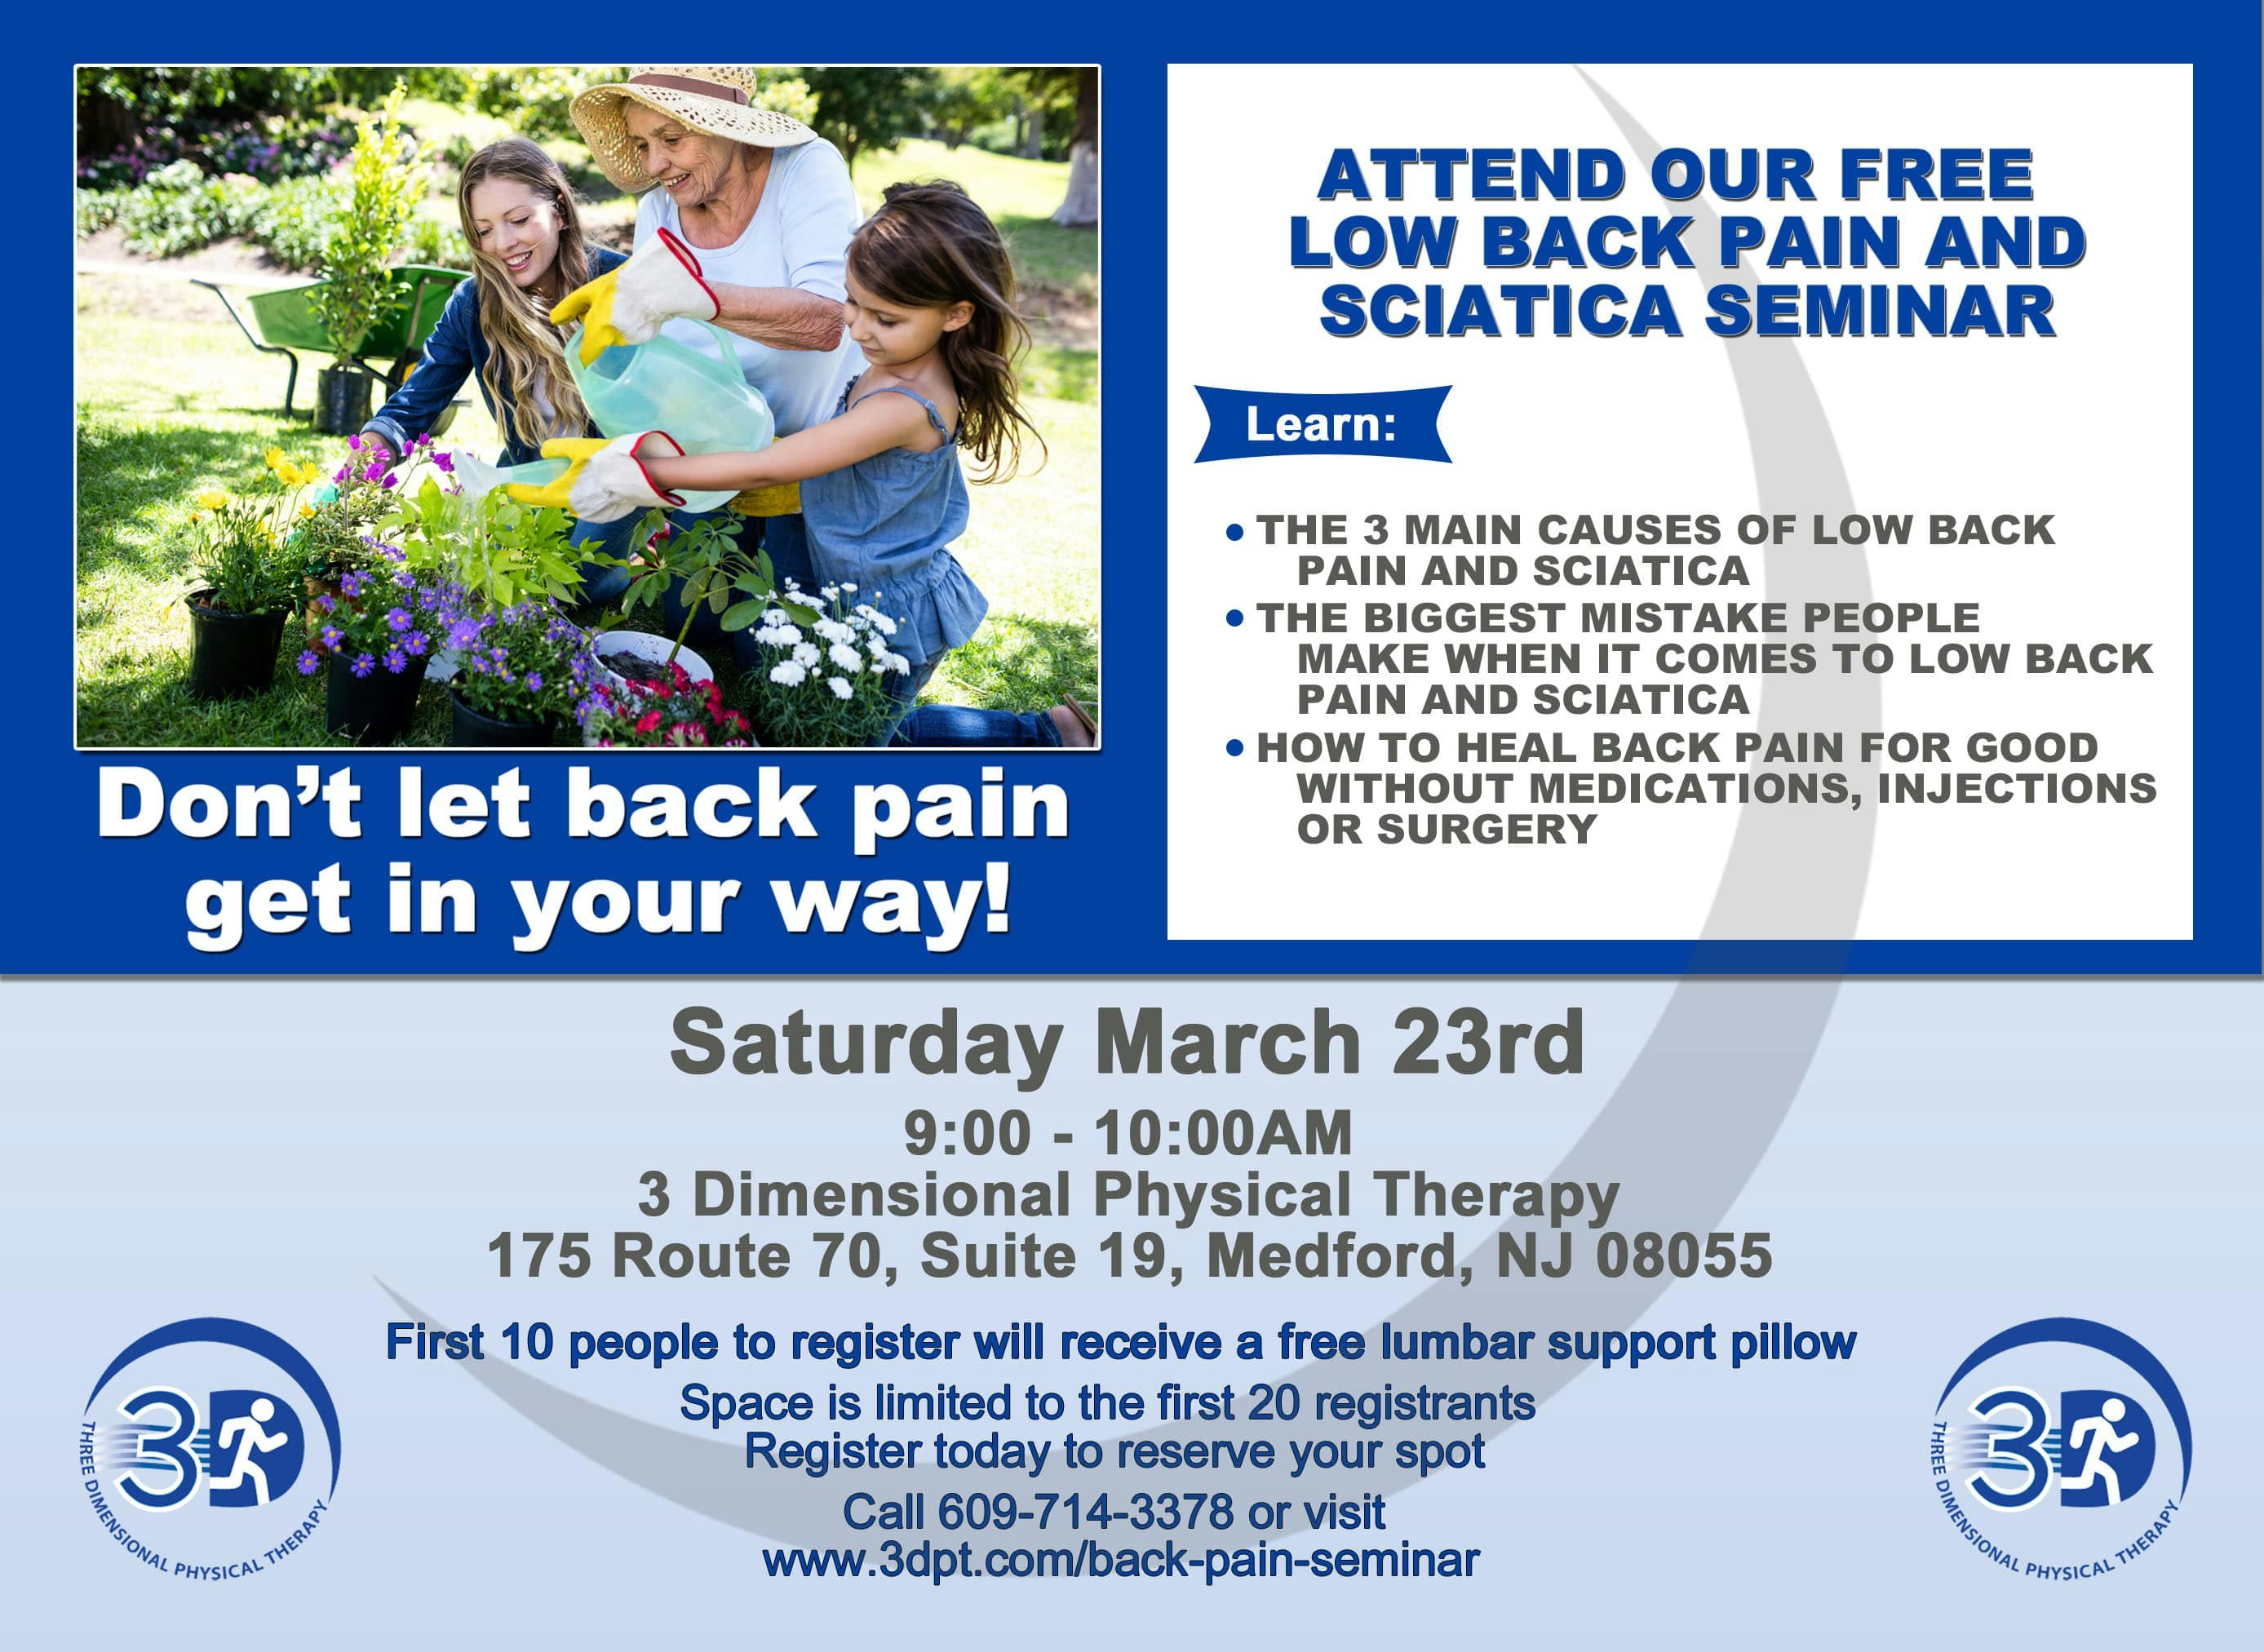 Lower Back Pain and Sciatica Seminar